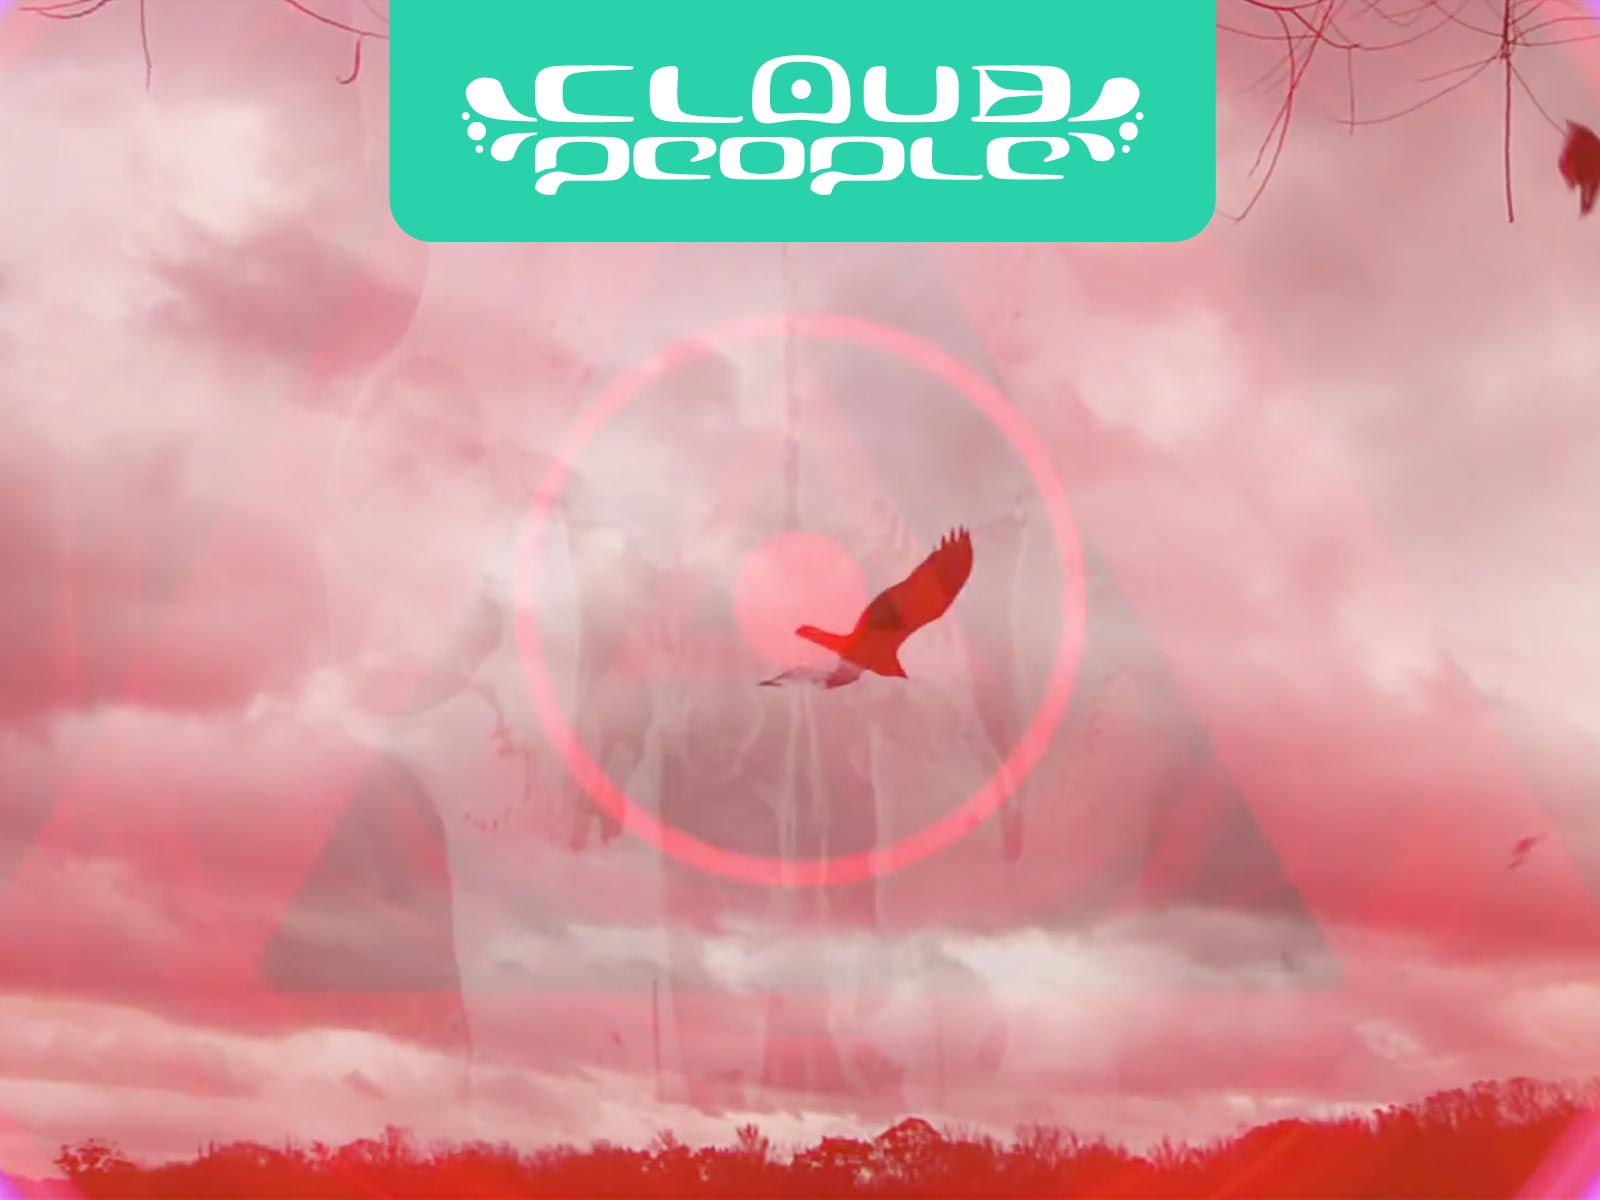 Watch new Cloud People music video “Dream Bridge”